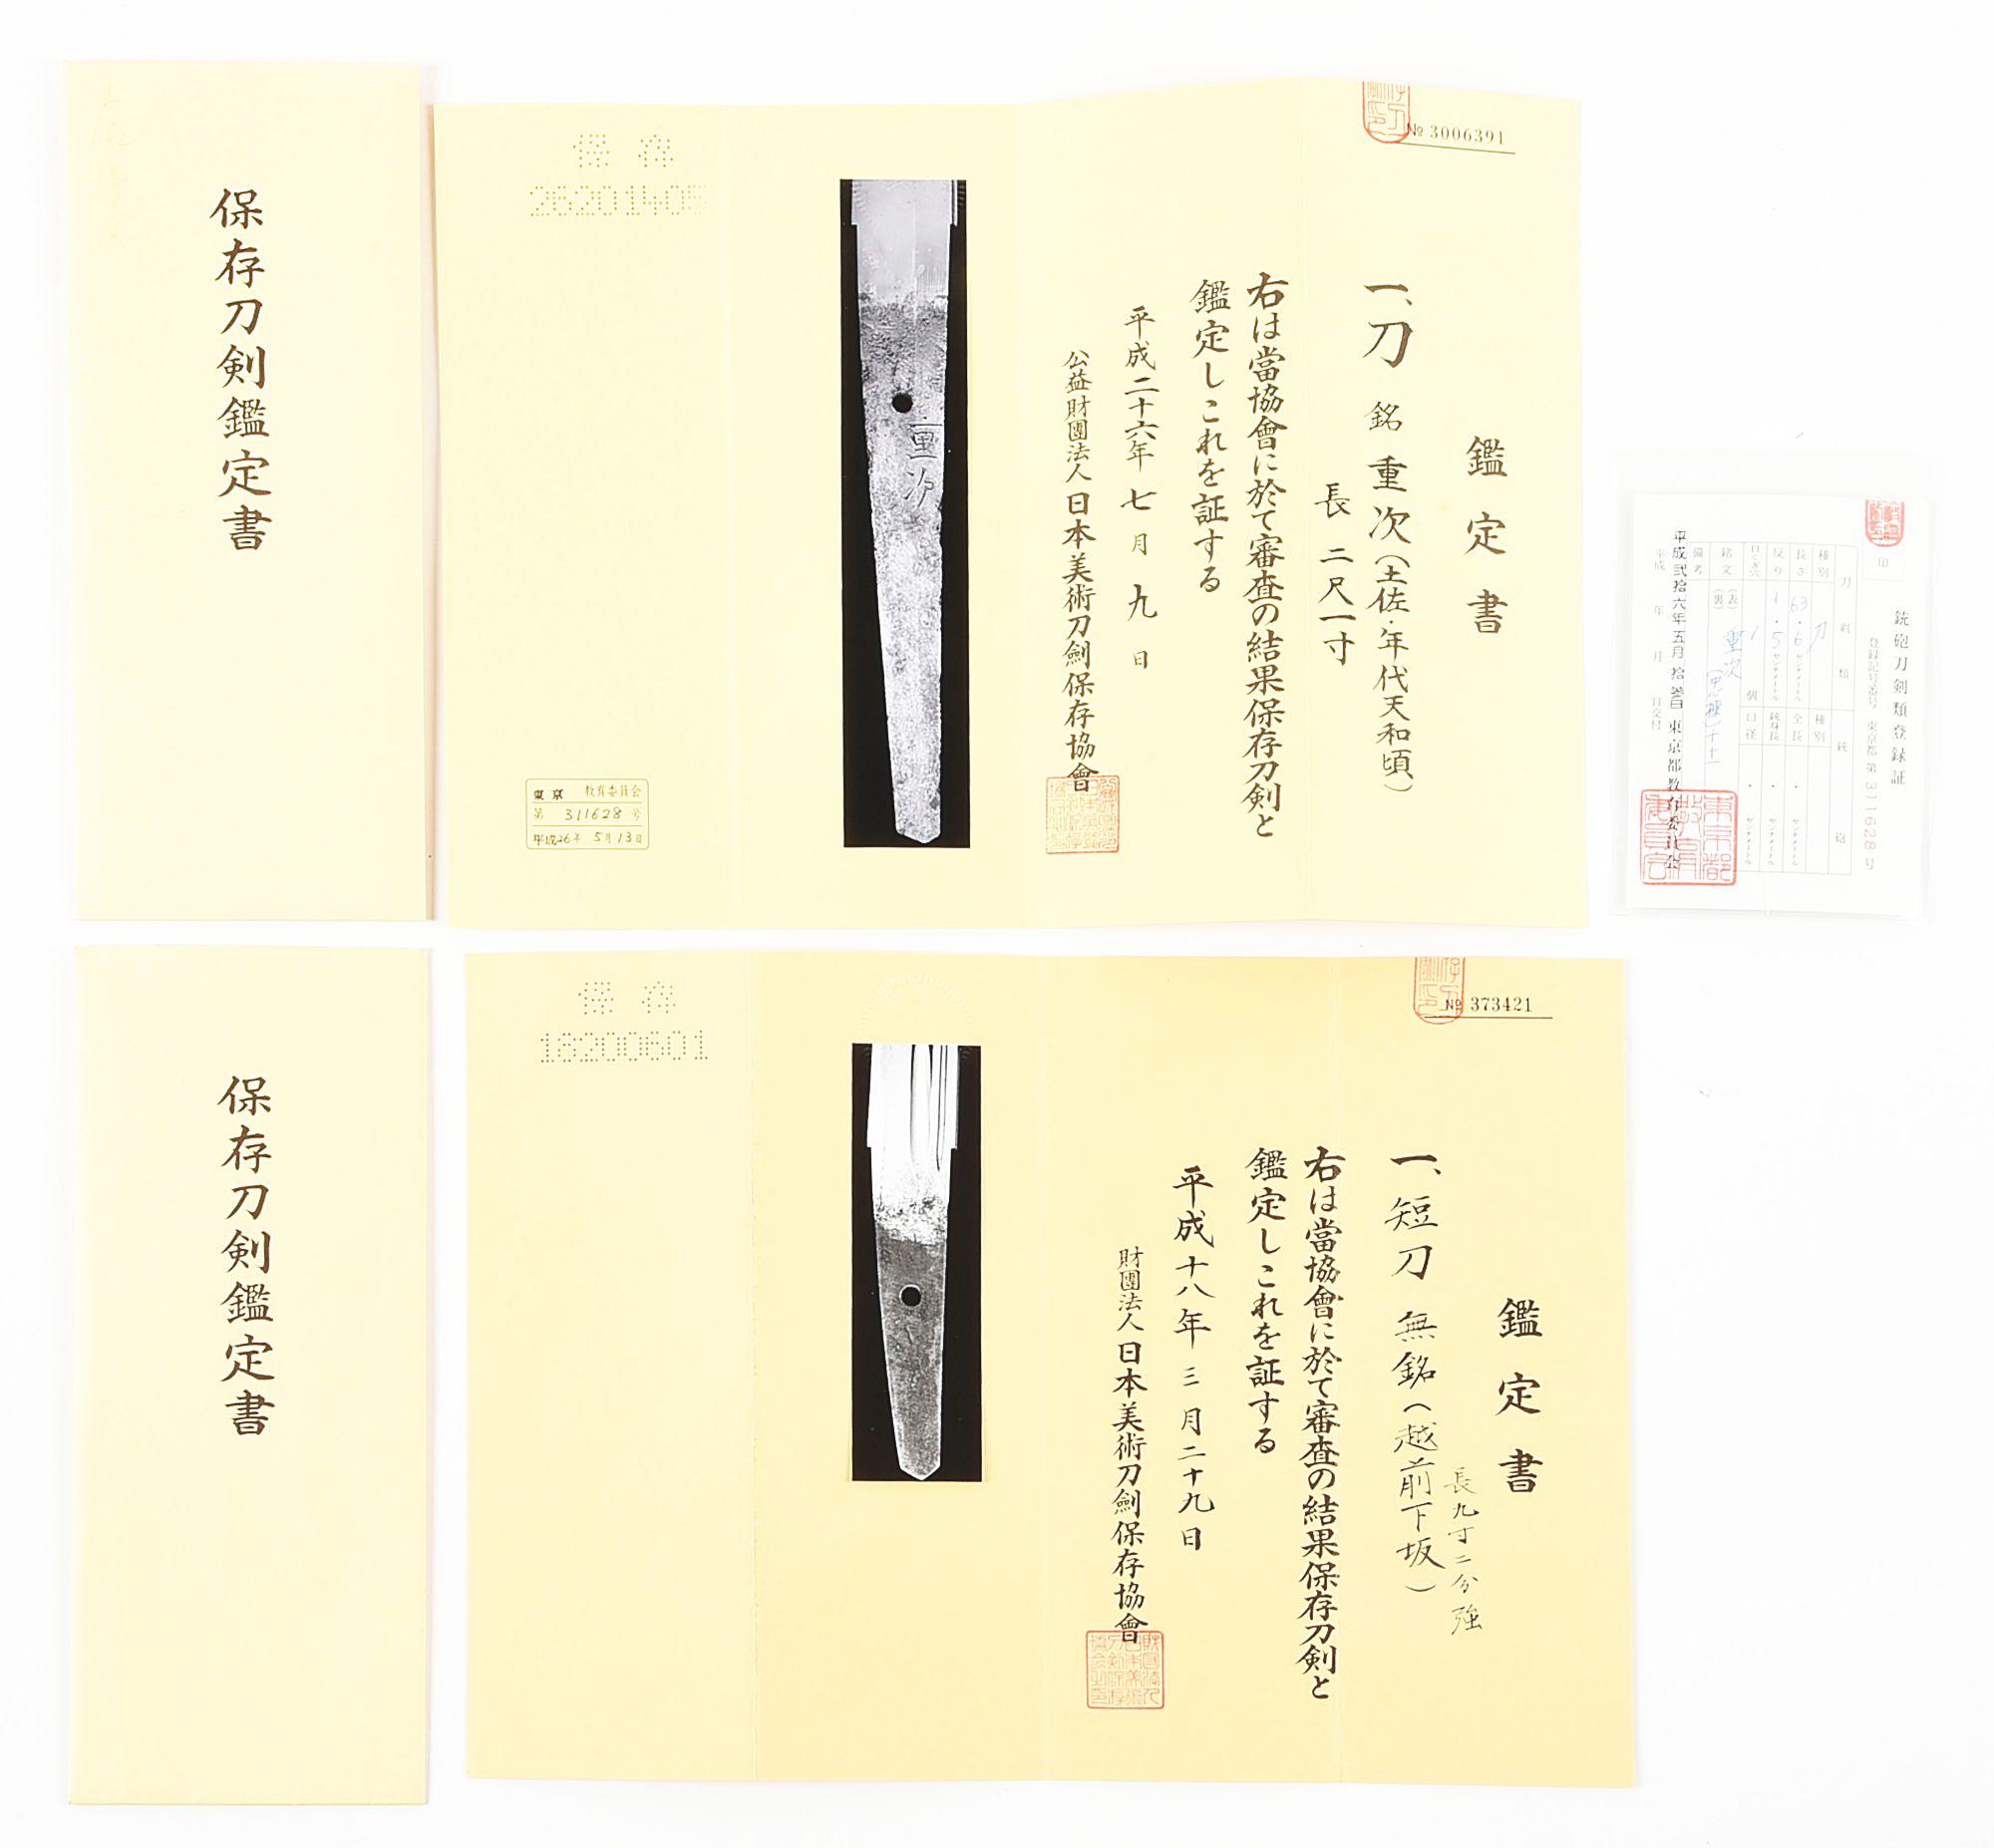 A COMPOSED DAISHO WITH NBTHK HOZON PAPERS TO SHIGETSUGU AND ECHIZEN SHIMOSAKA.